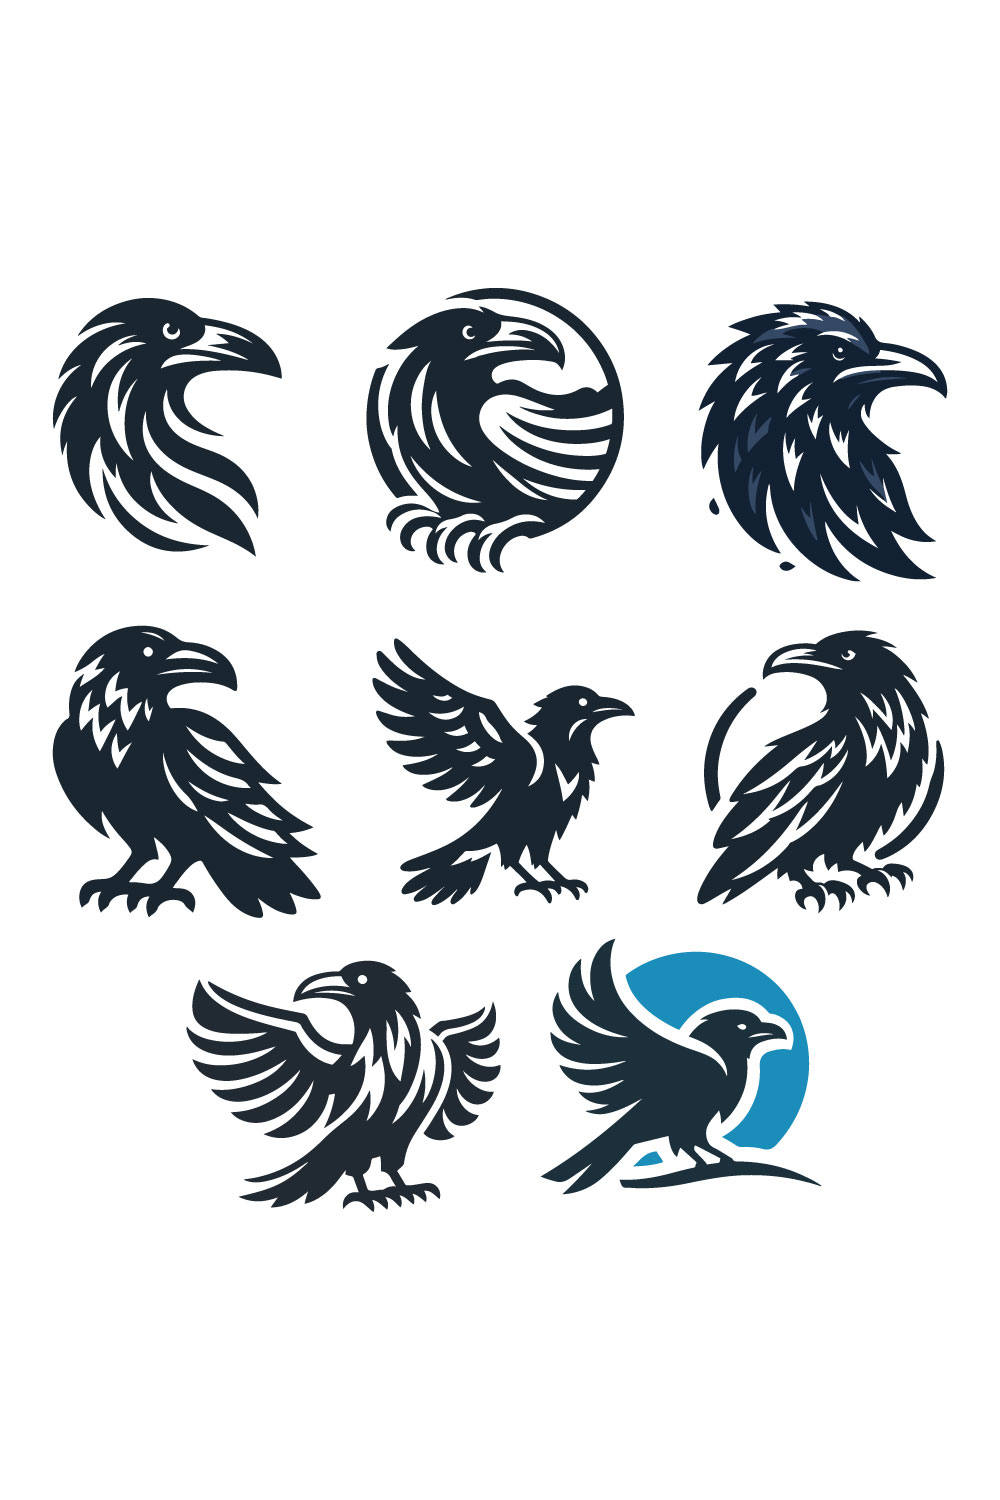 8 Raven Vector Logos Illustration pinterest preview image.